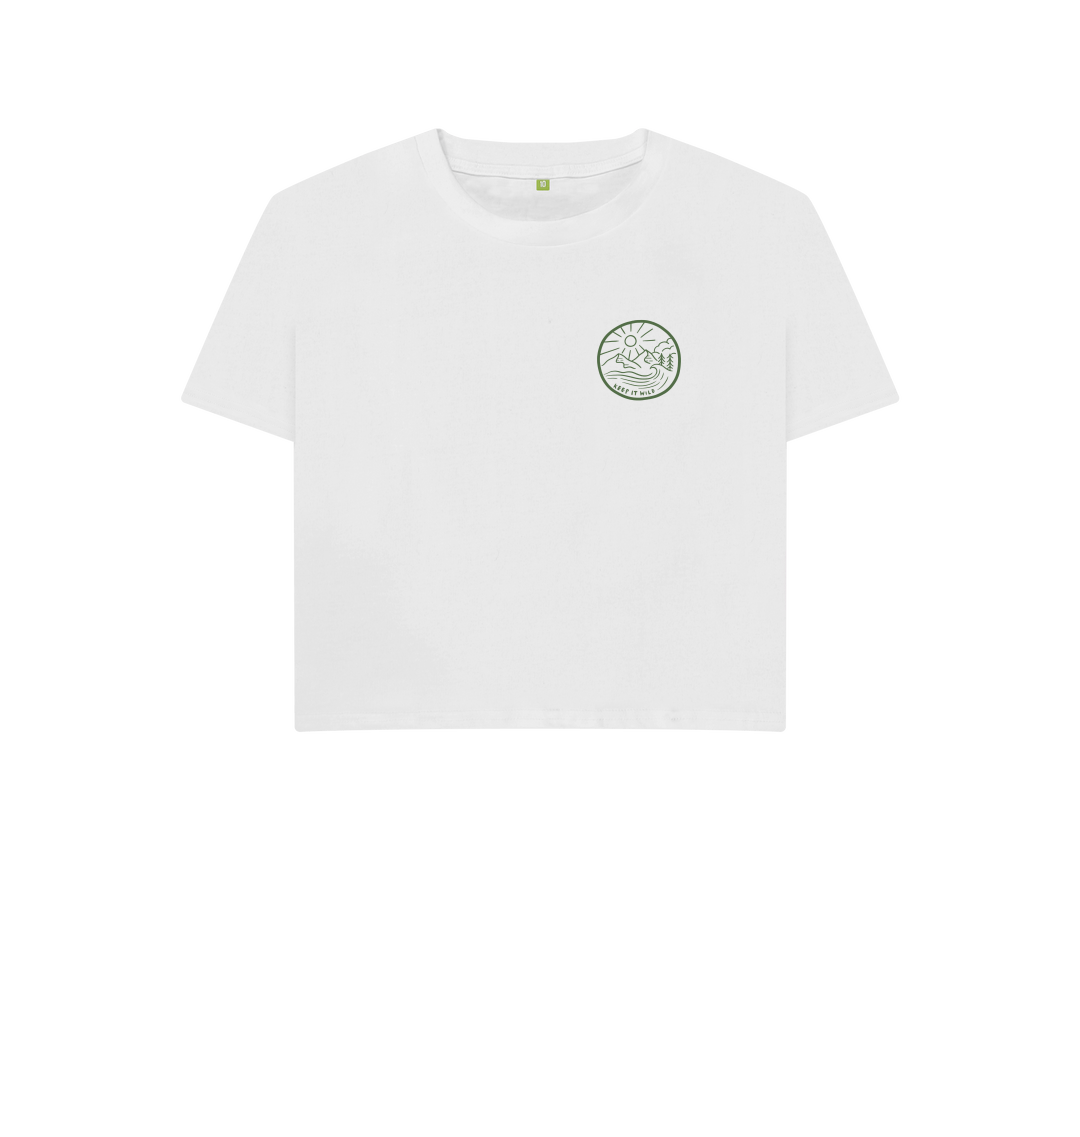 Keep It Wild Boxy T - shirt - Printed T - shirt